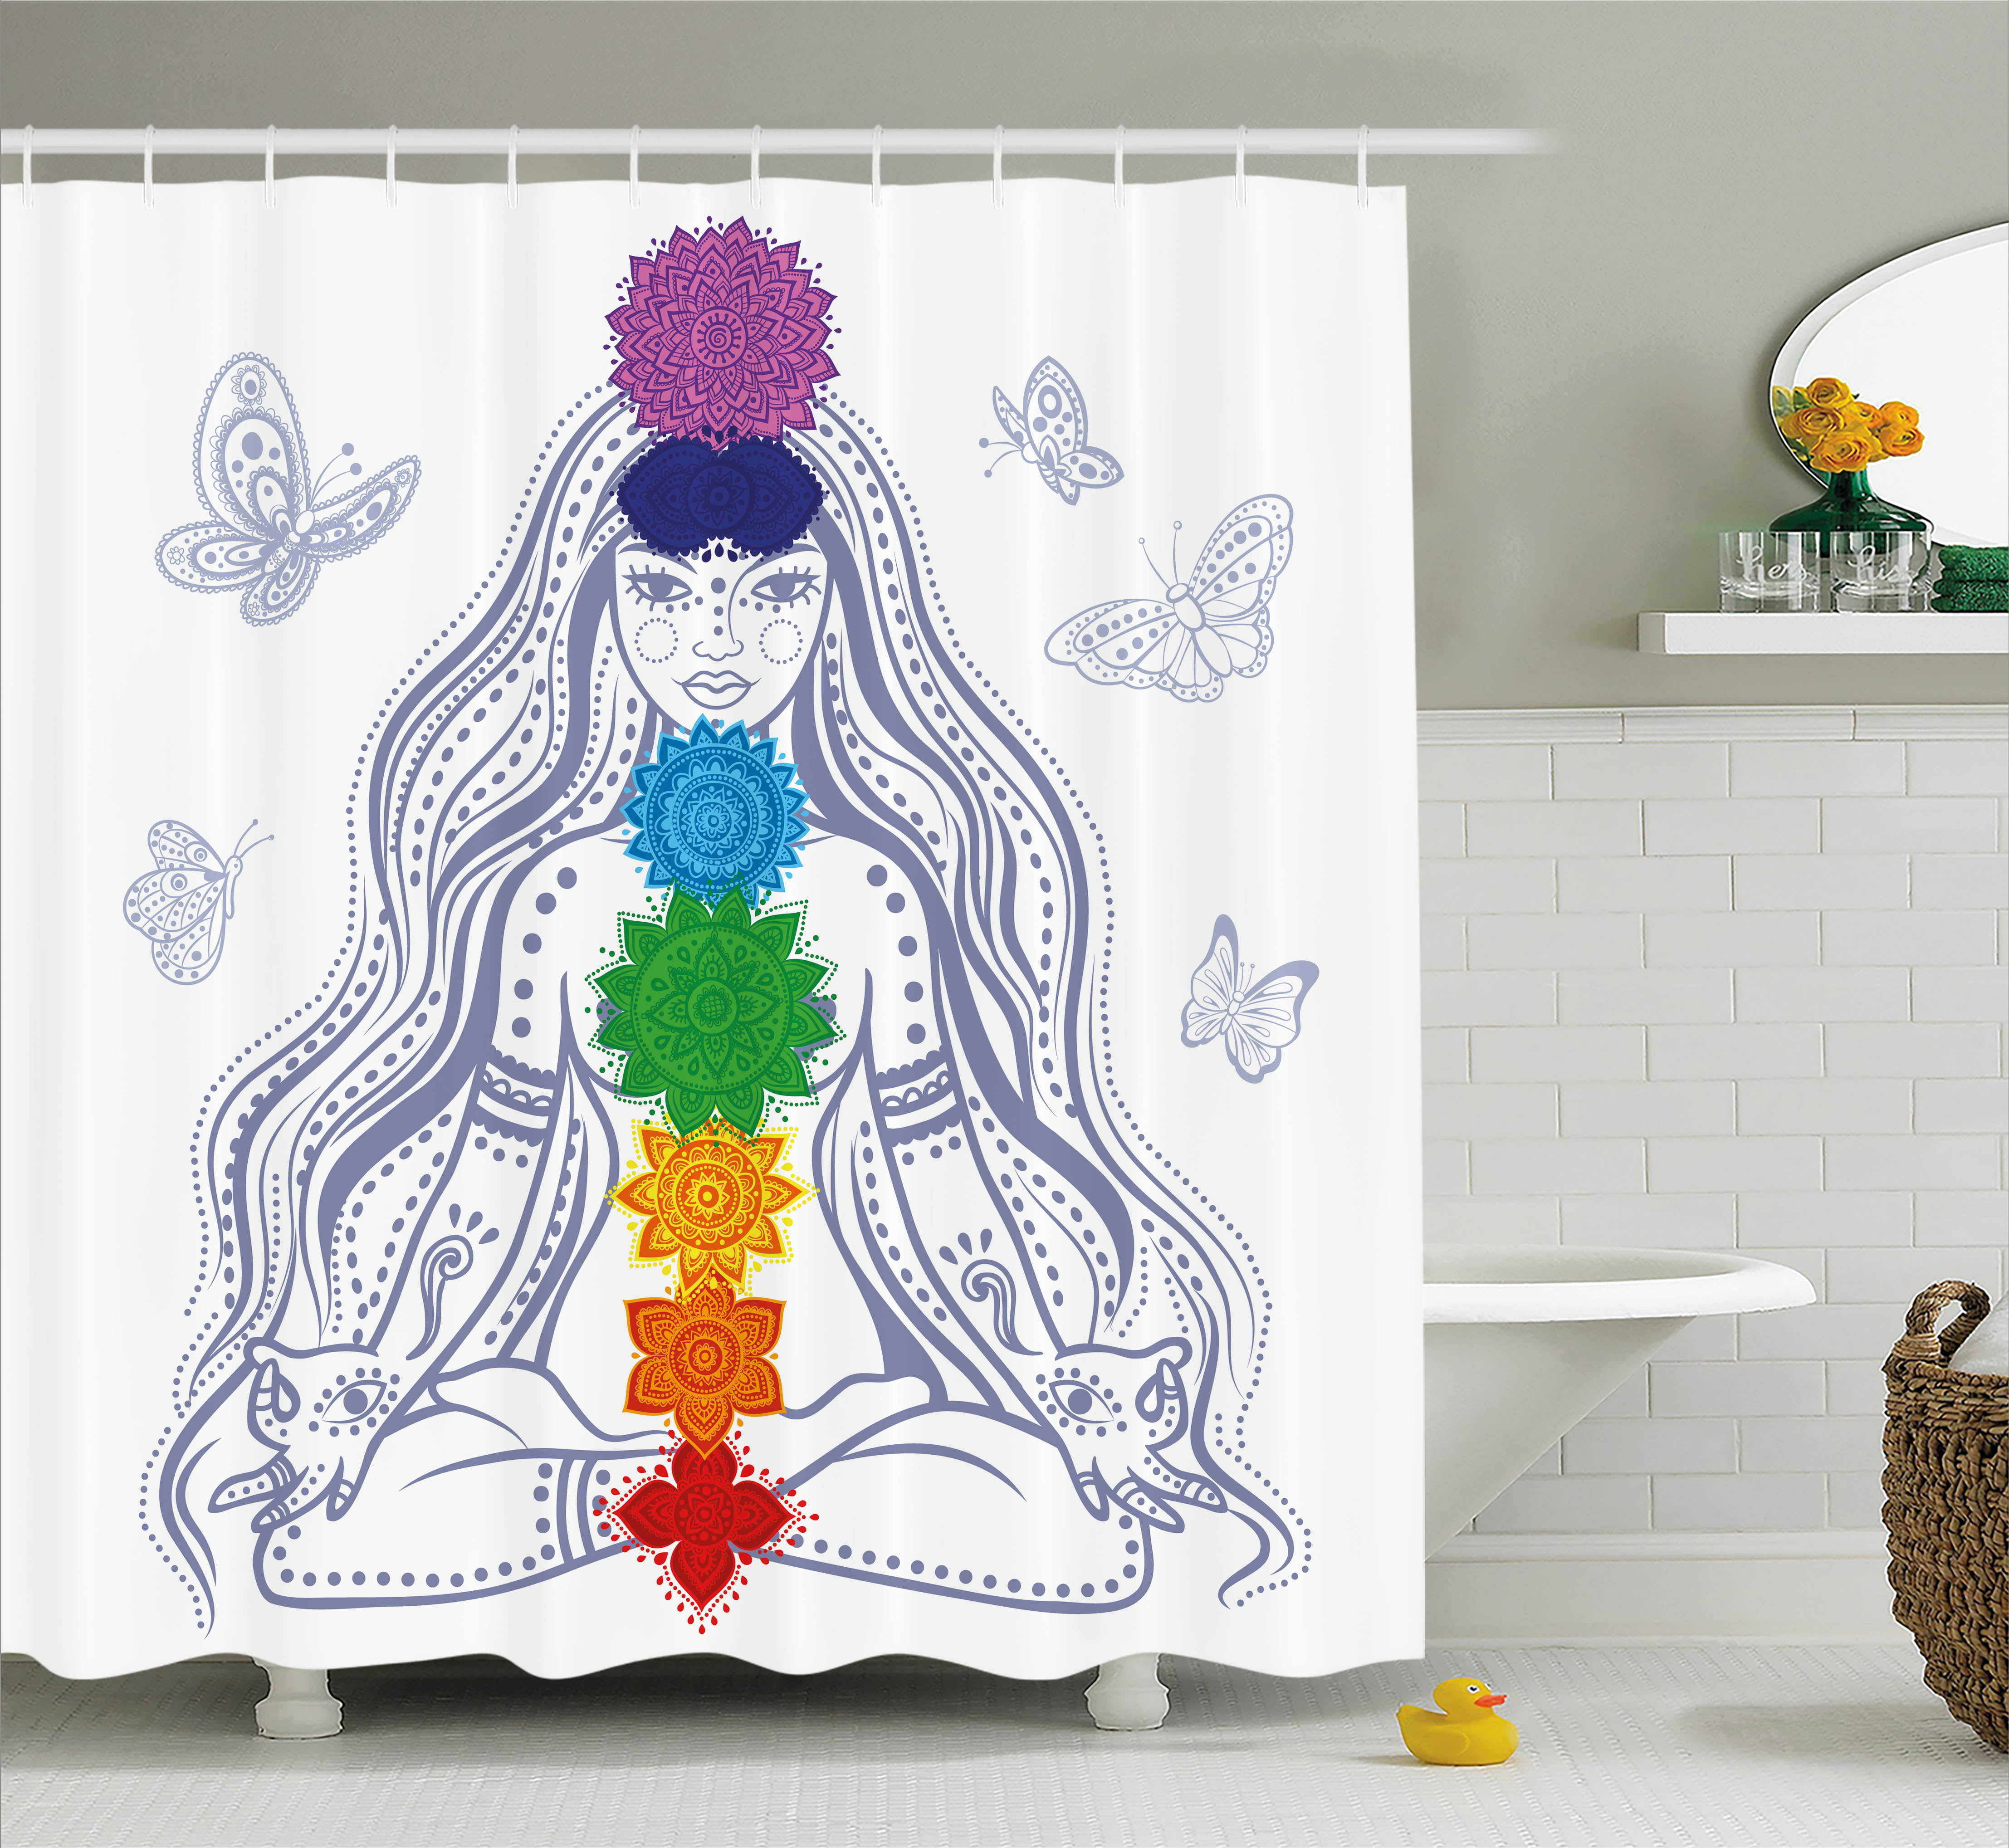 Beautiful Zen Garden Lotus Shower Curtain Polyester Waterproof with Hooks 